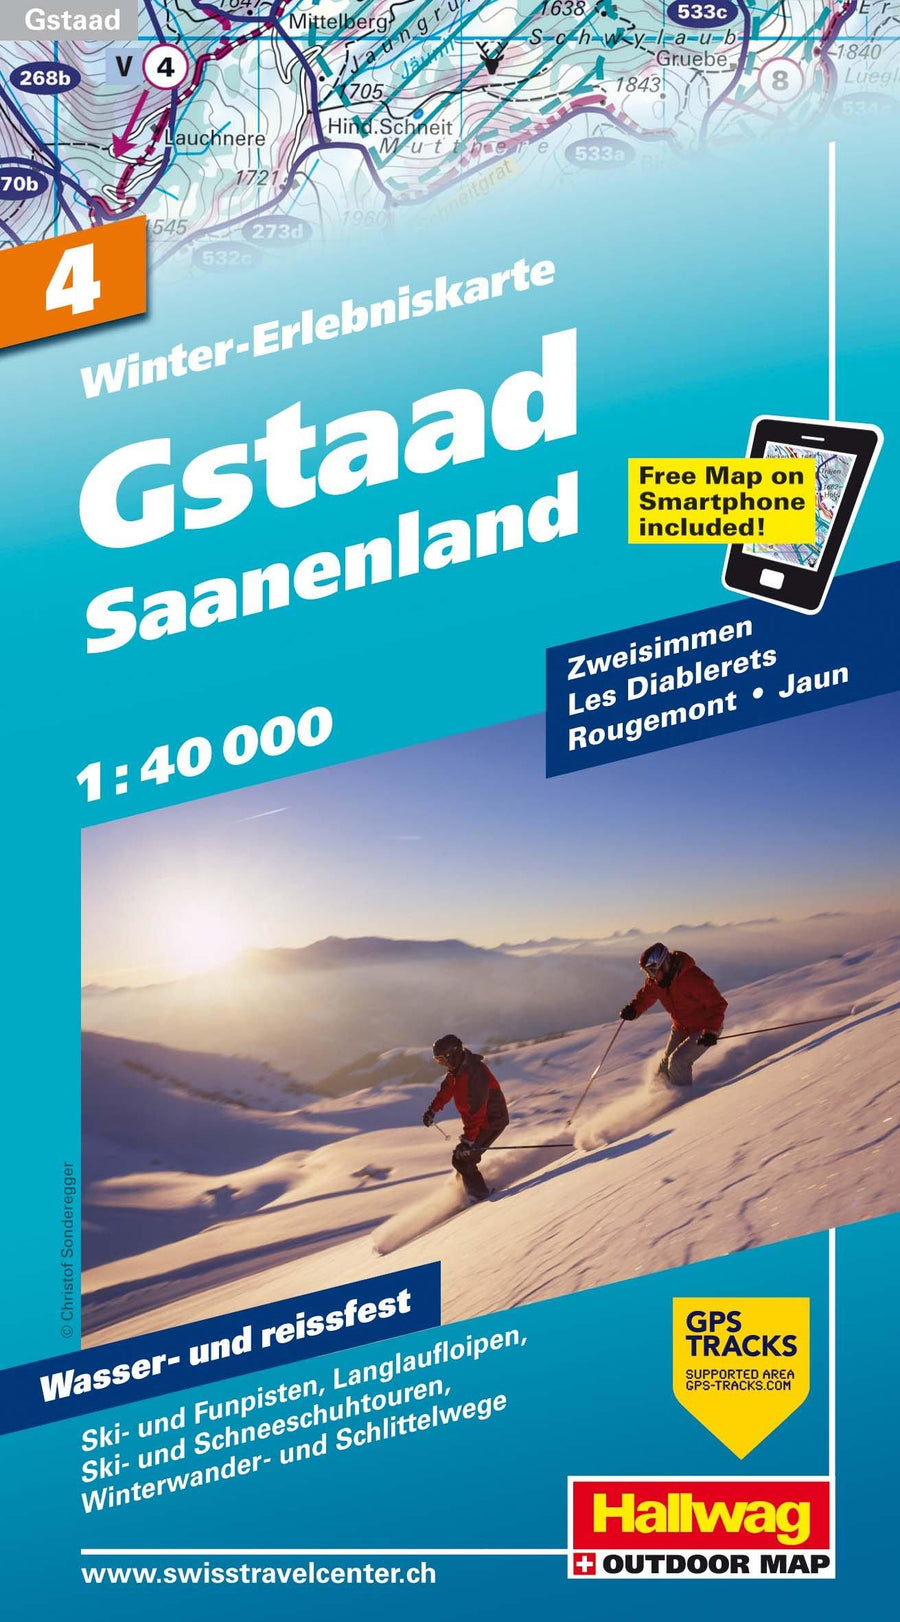 Carte de randonnée (ski, raquettes) - Gstaad - Saanenland (Suisse) | Hallwag carte pliée Hallwag 